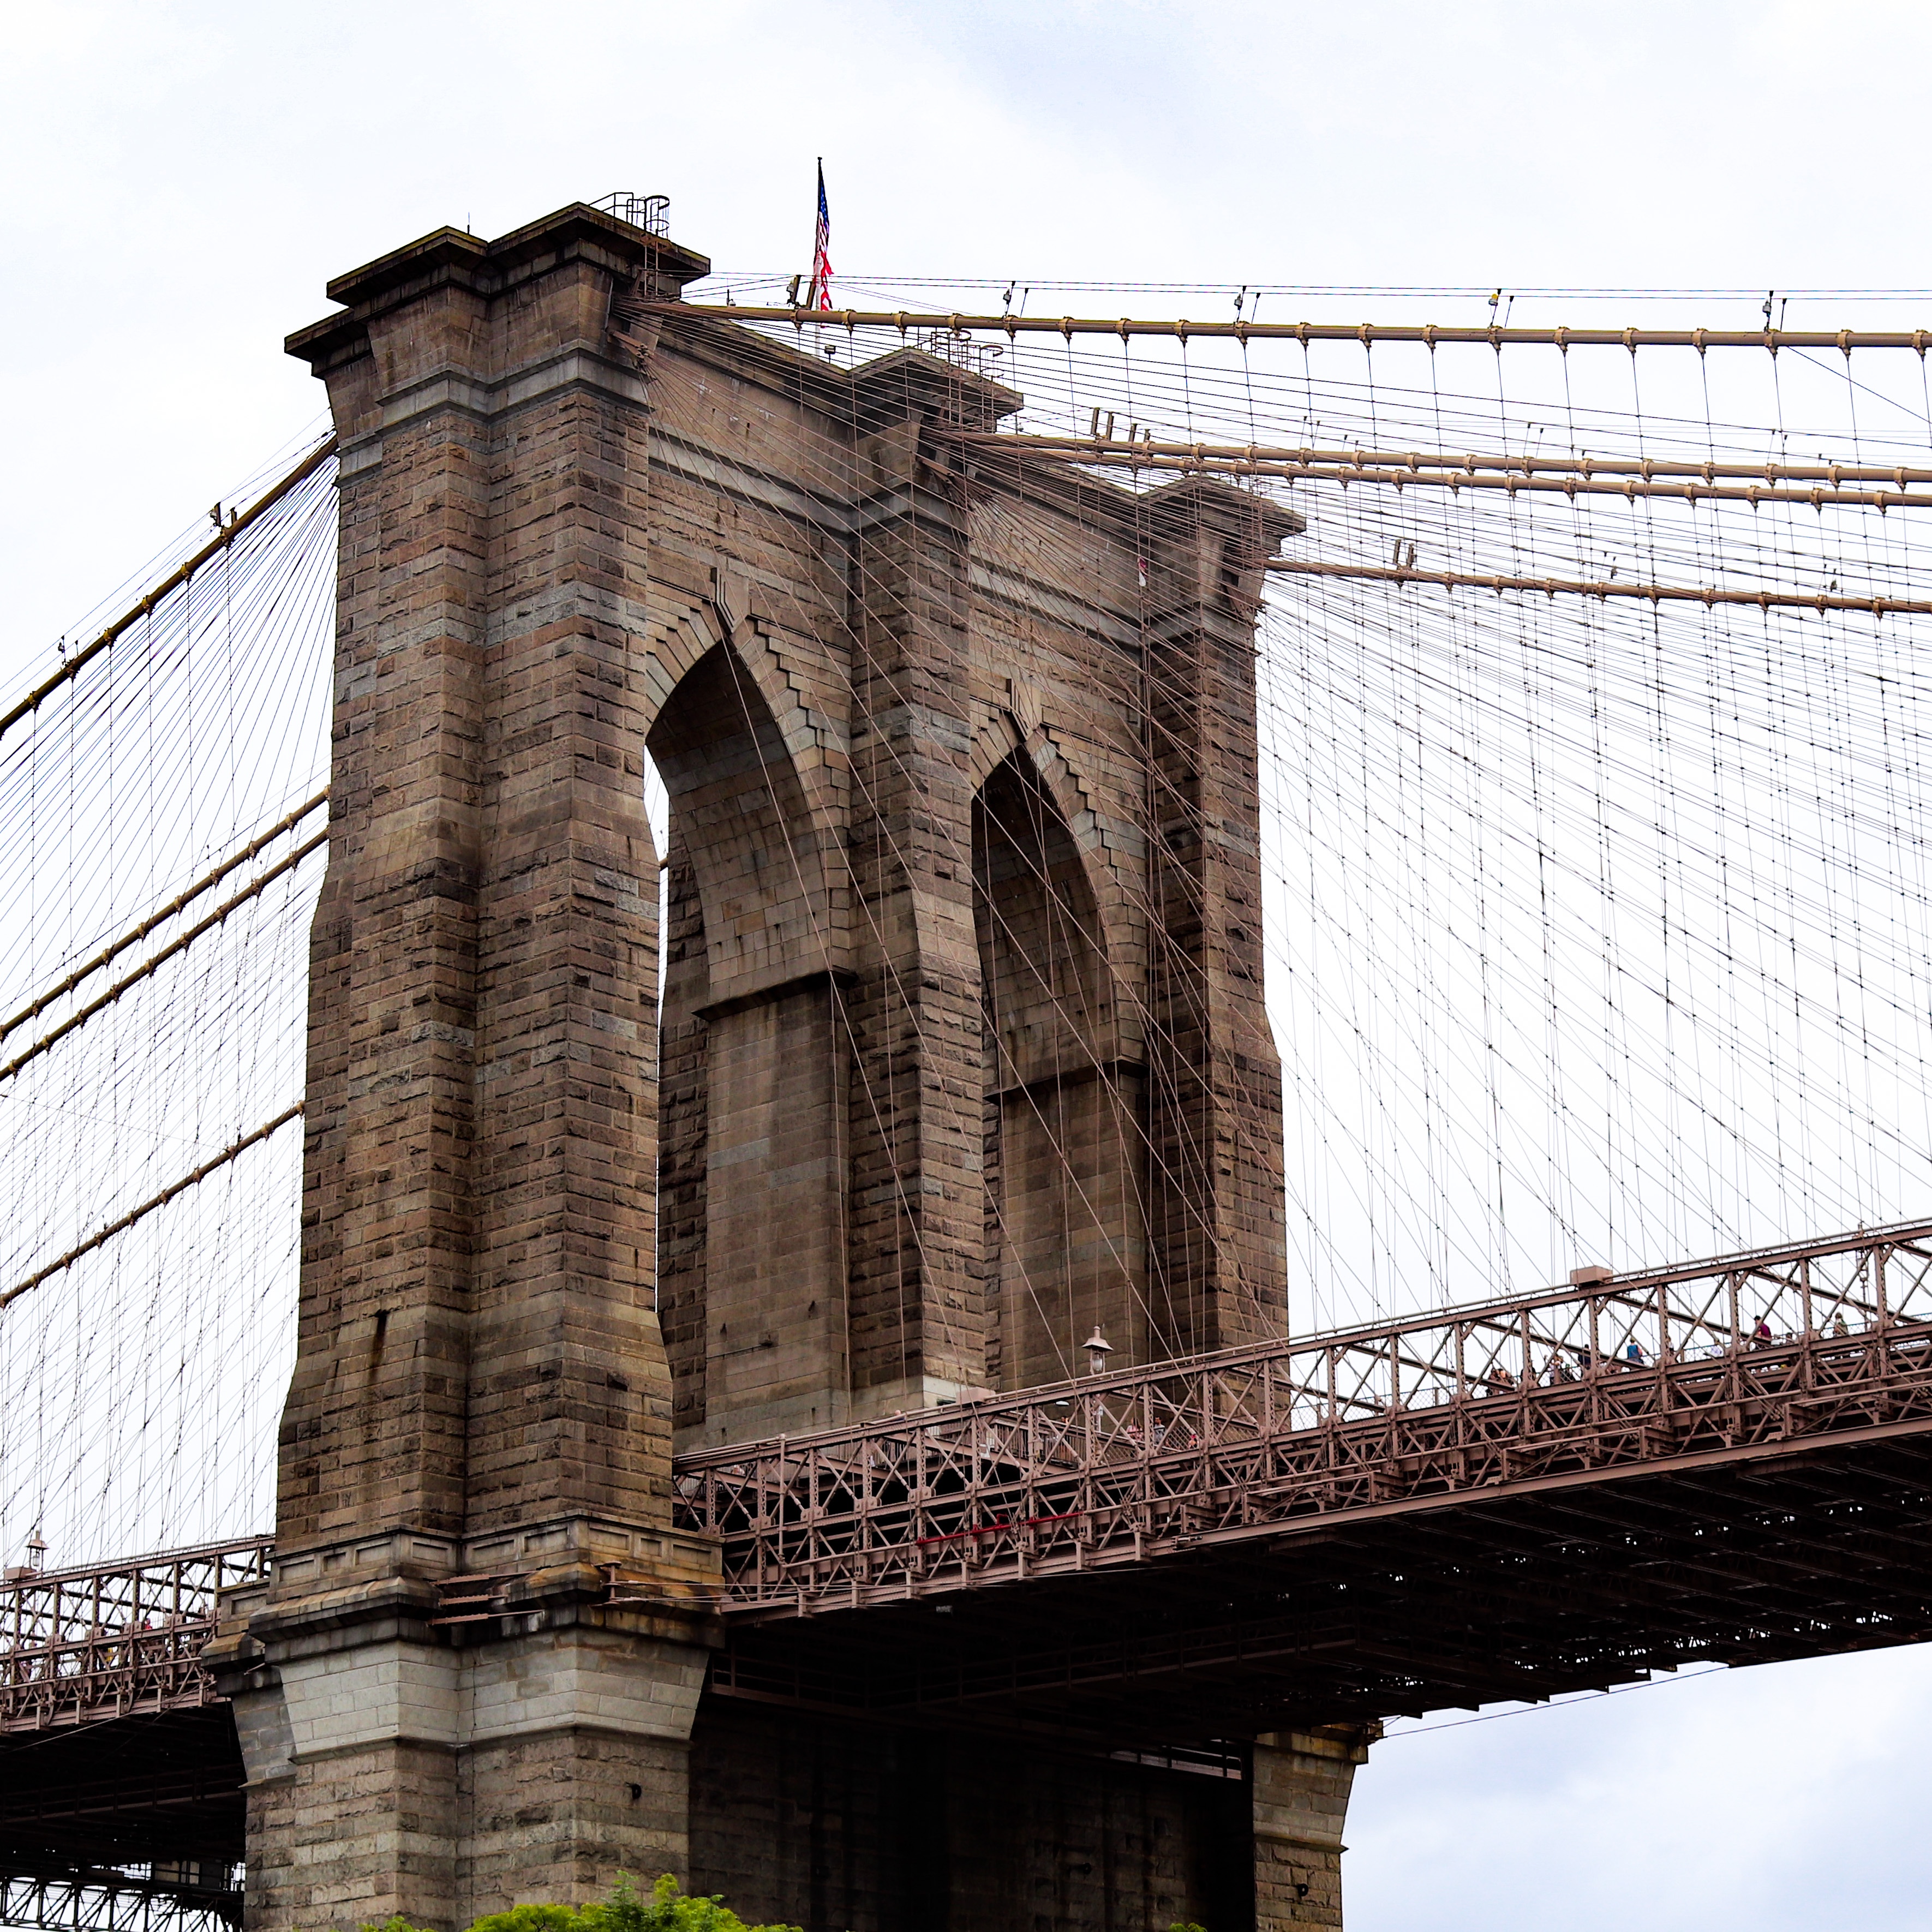 A view of Brooklyn Bridge's eastern pillar taken from the Brookyln Bridge Park.